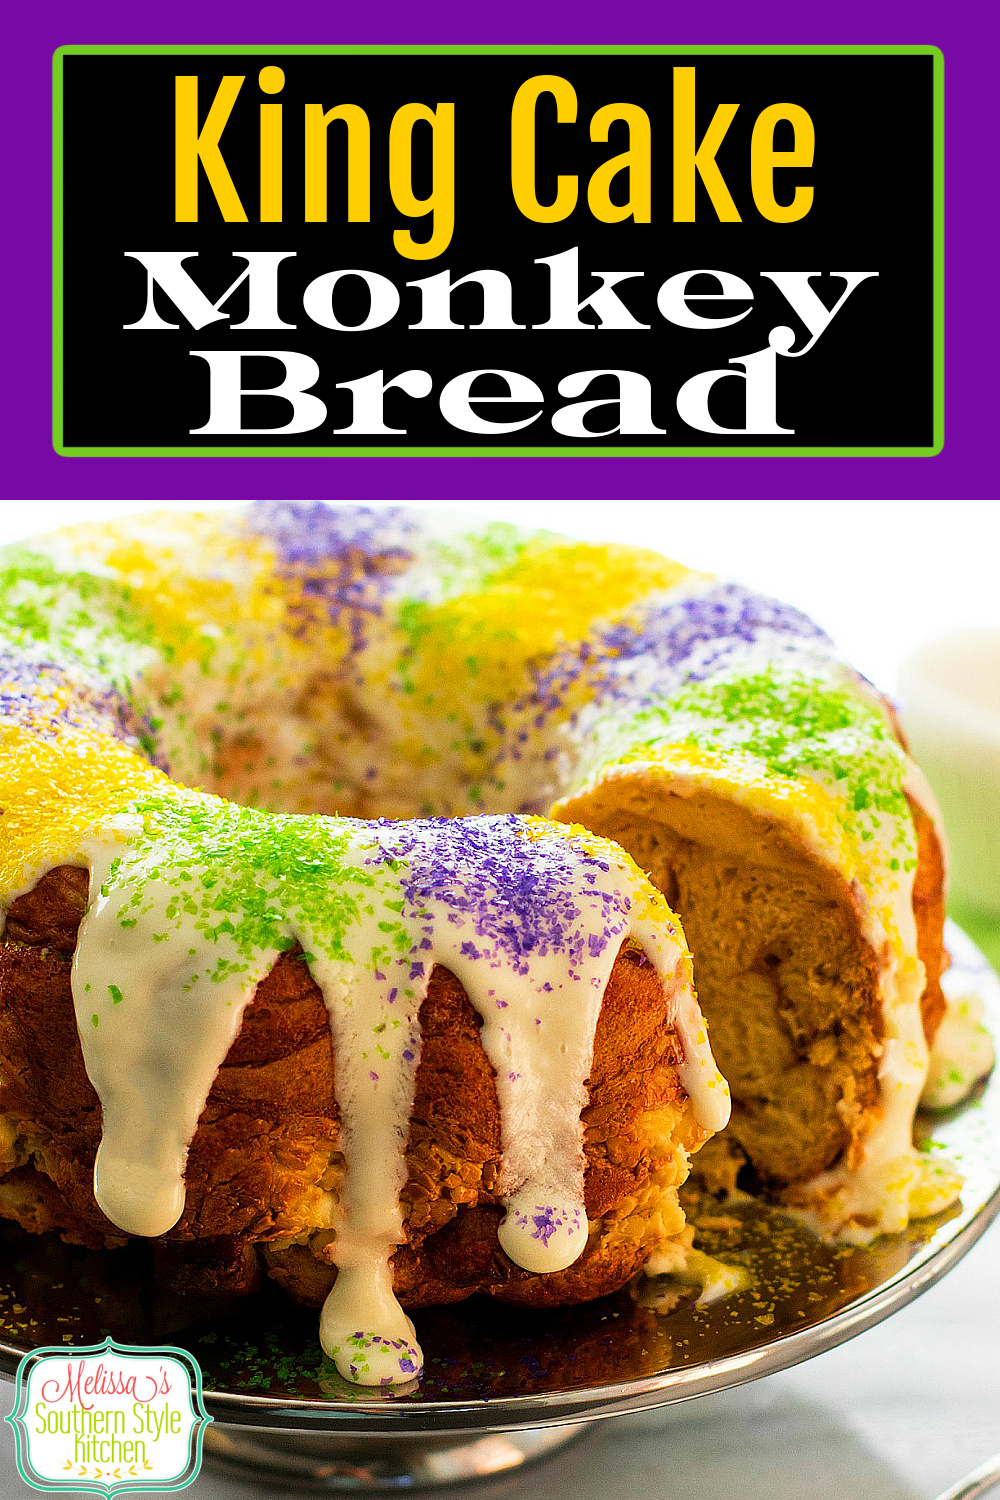 Enjoy this festive King Cake Monkey Bread for your own Mardis Gras celebration at home #kingcake #monkeybread #kingcakemonkeybread #NOLA #creolerecipes #desserts #mardisgrasrecipes #southernrecipes via @melissasssk